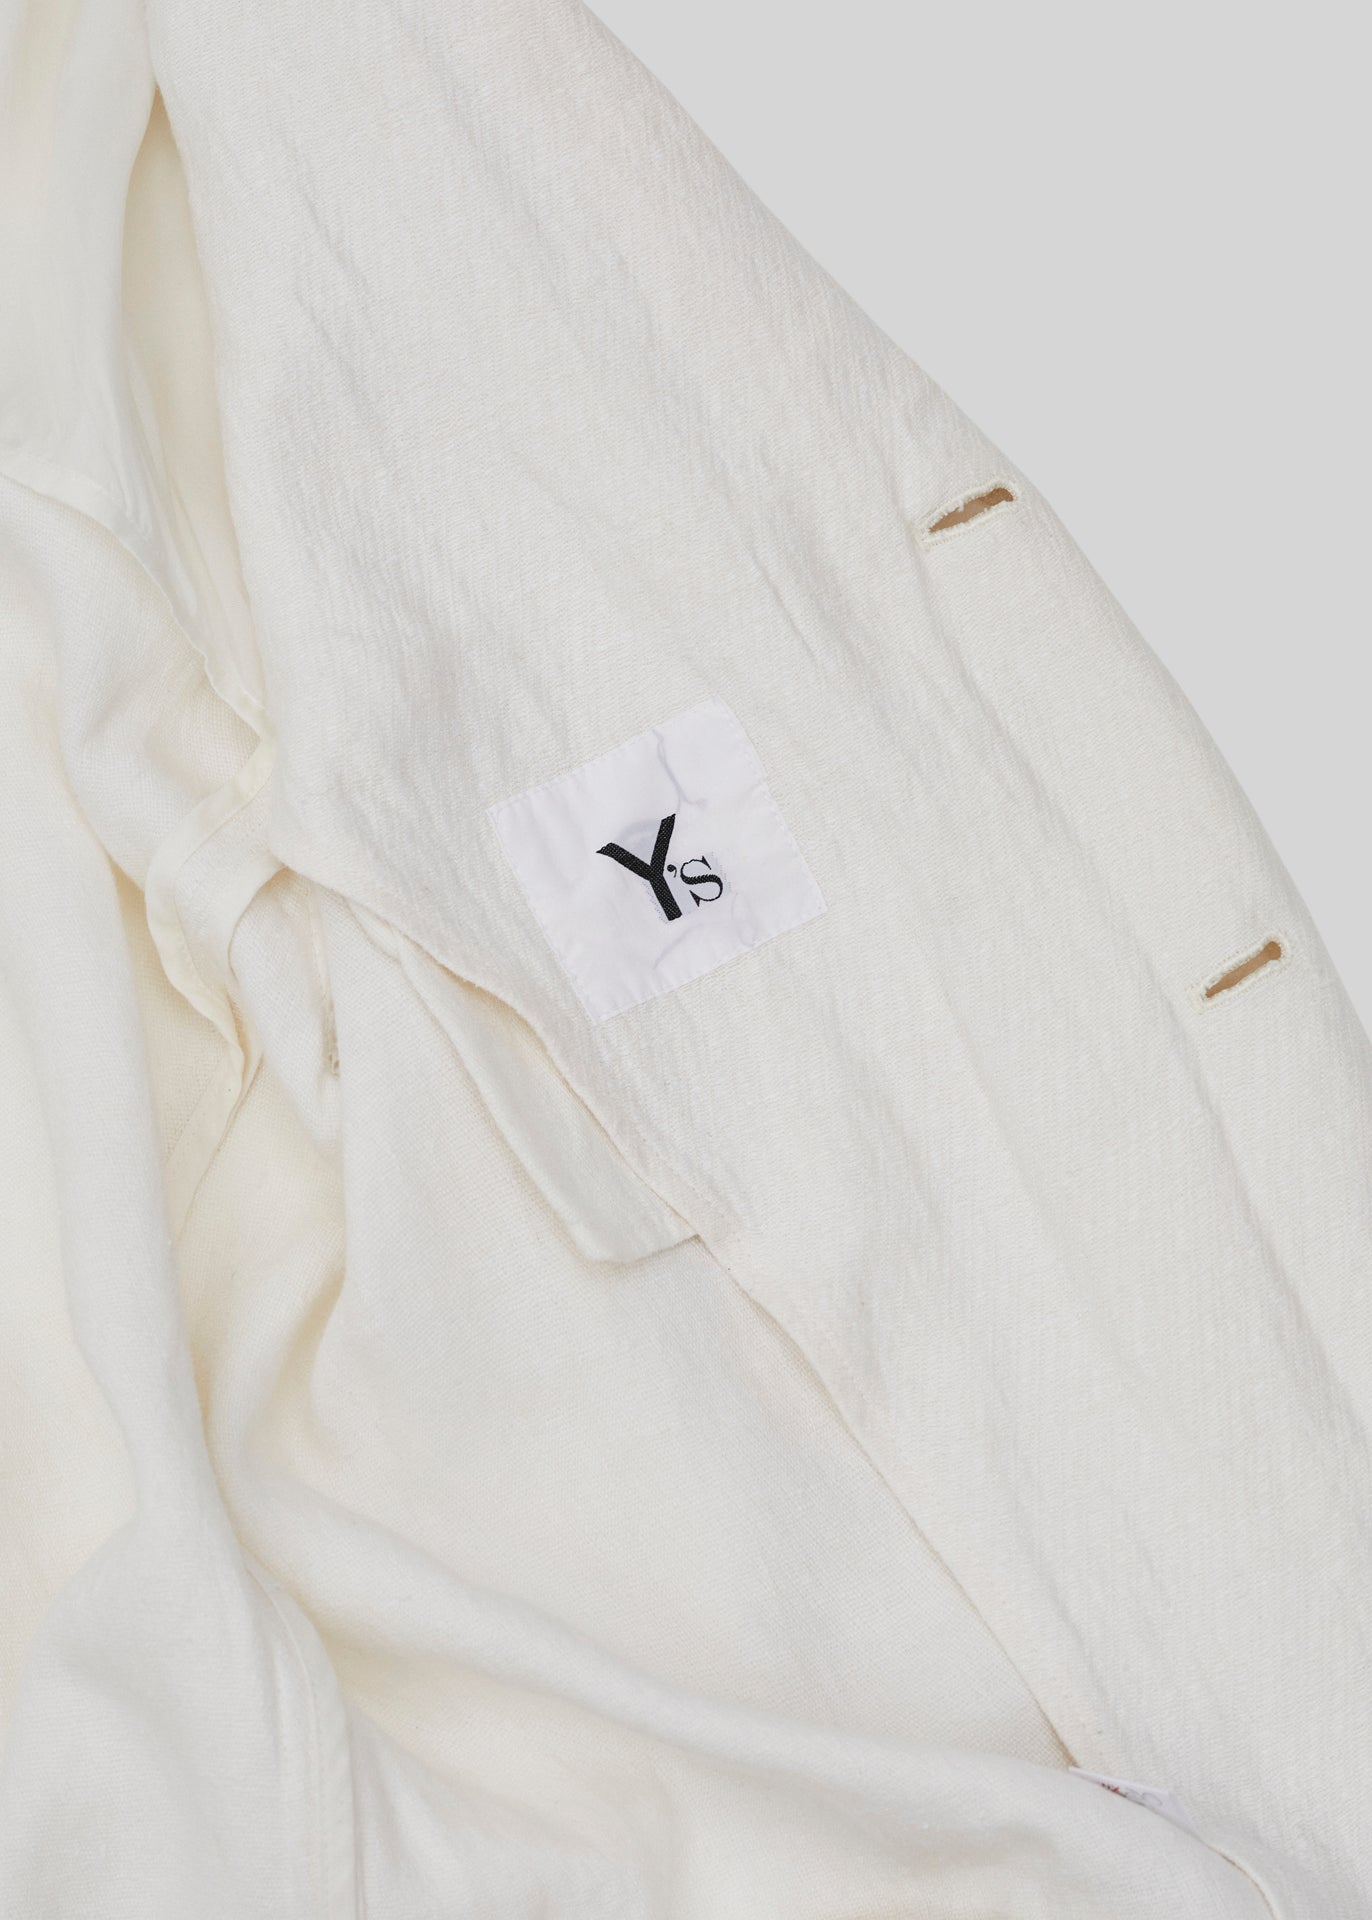 Y's by Yohji Yamamoto jacket - M